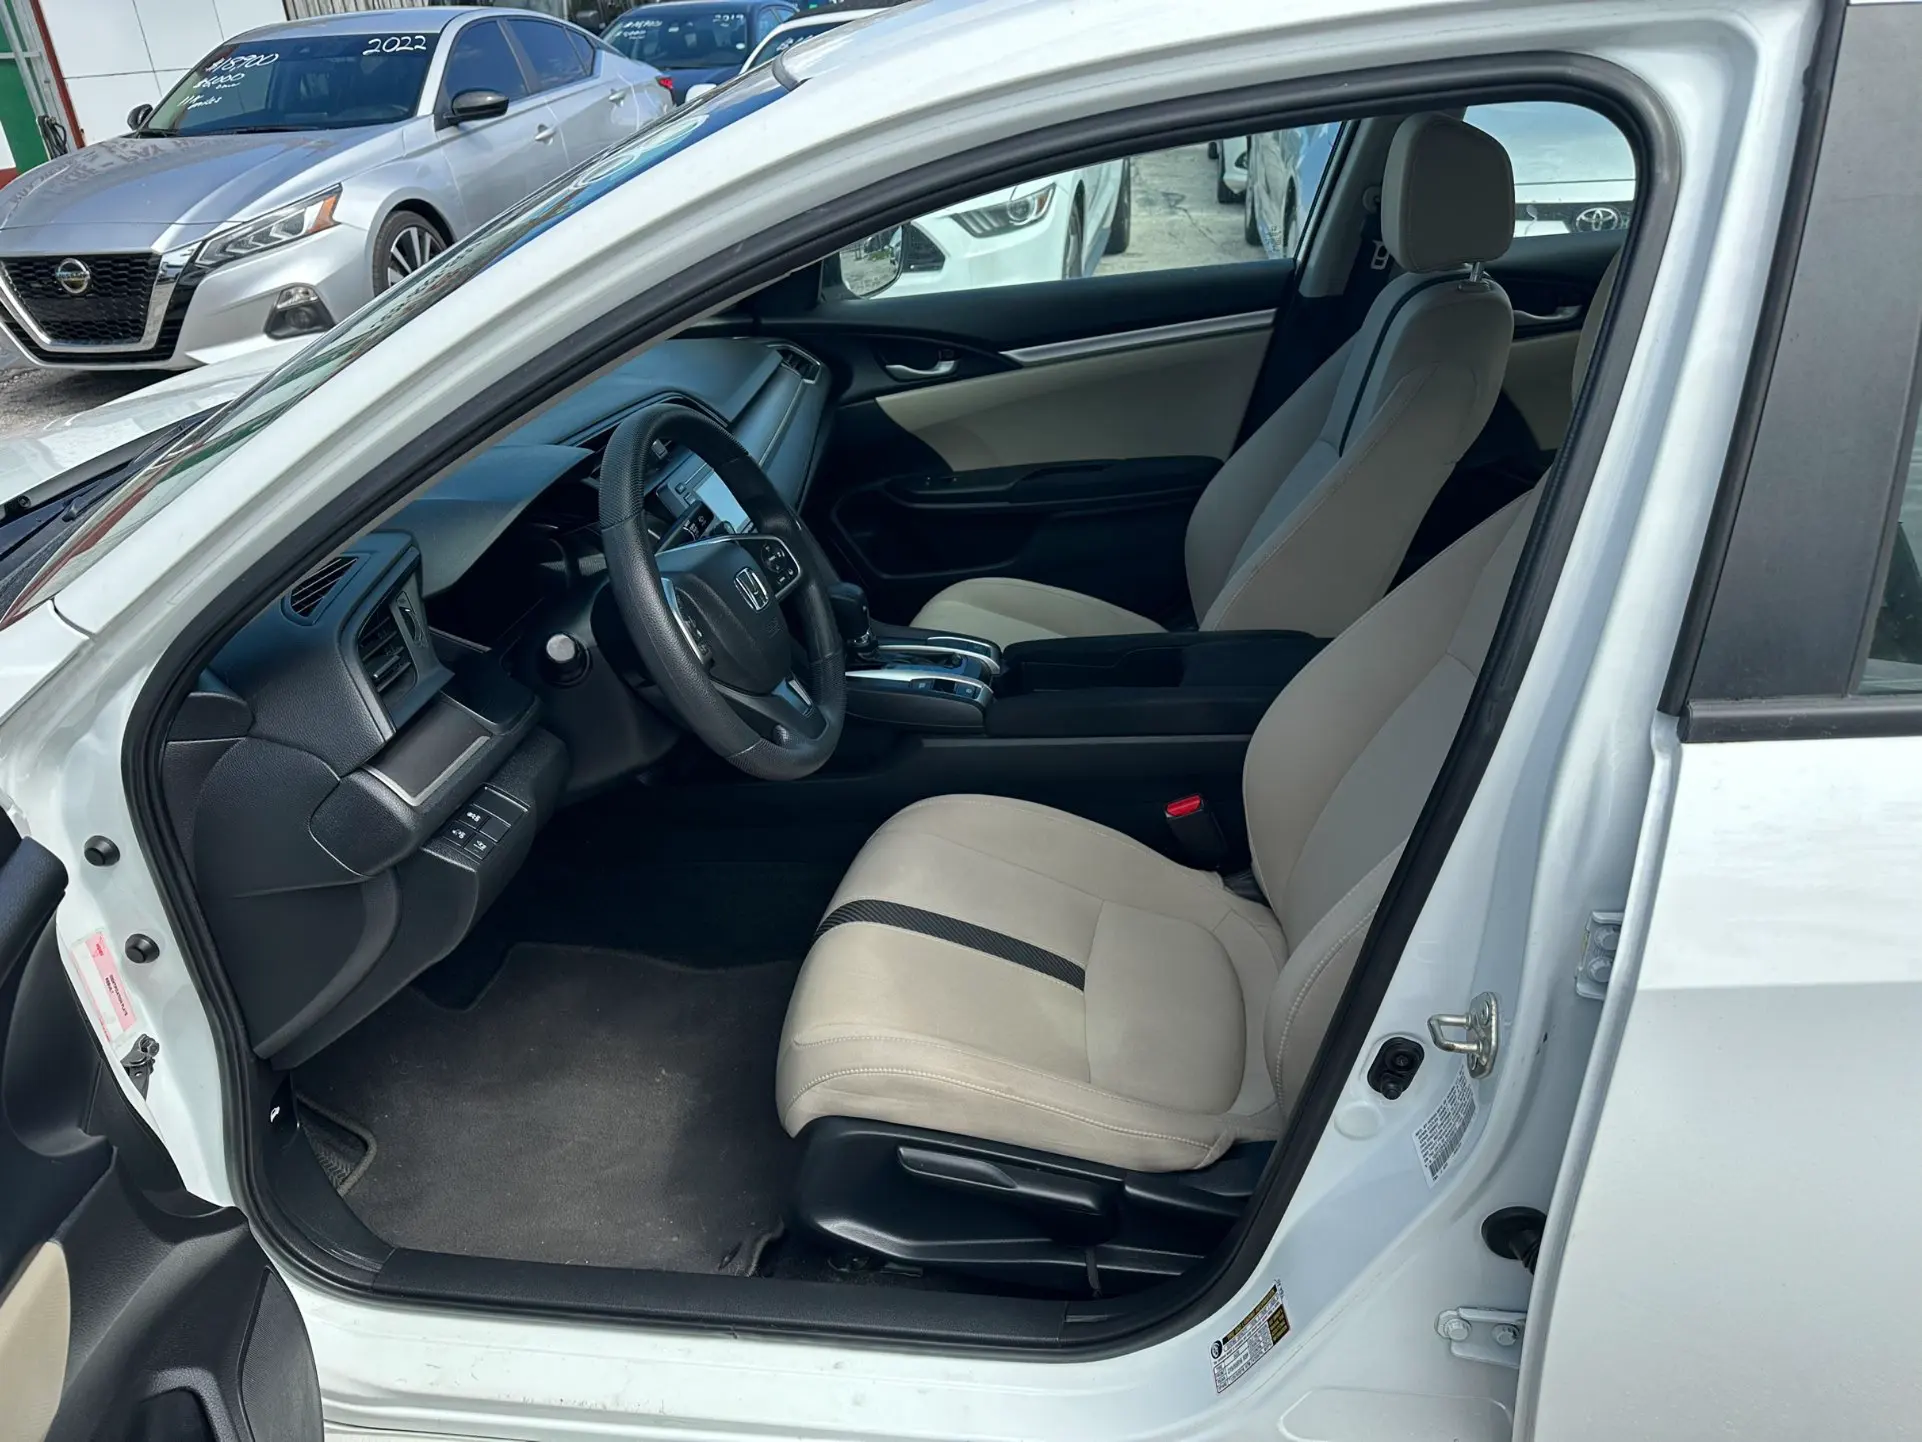 used 2018 Honda Civic - interior view 1